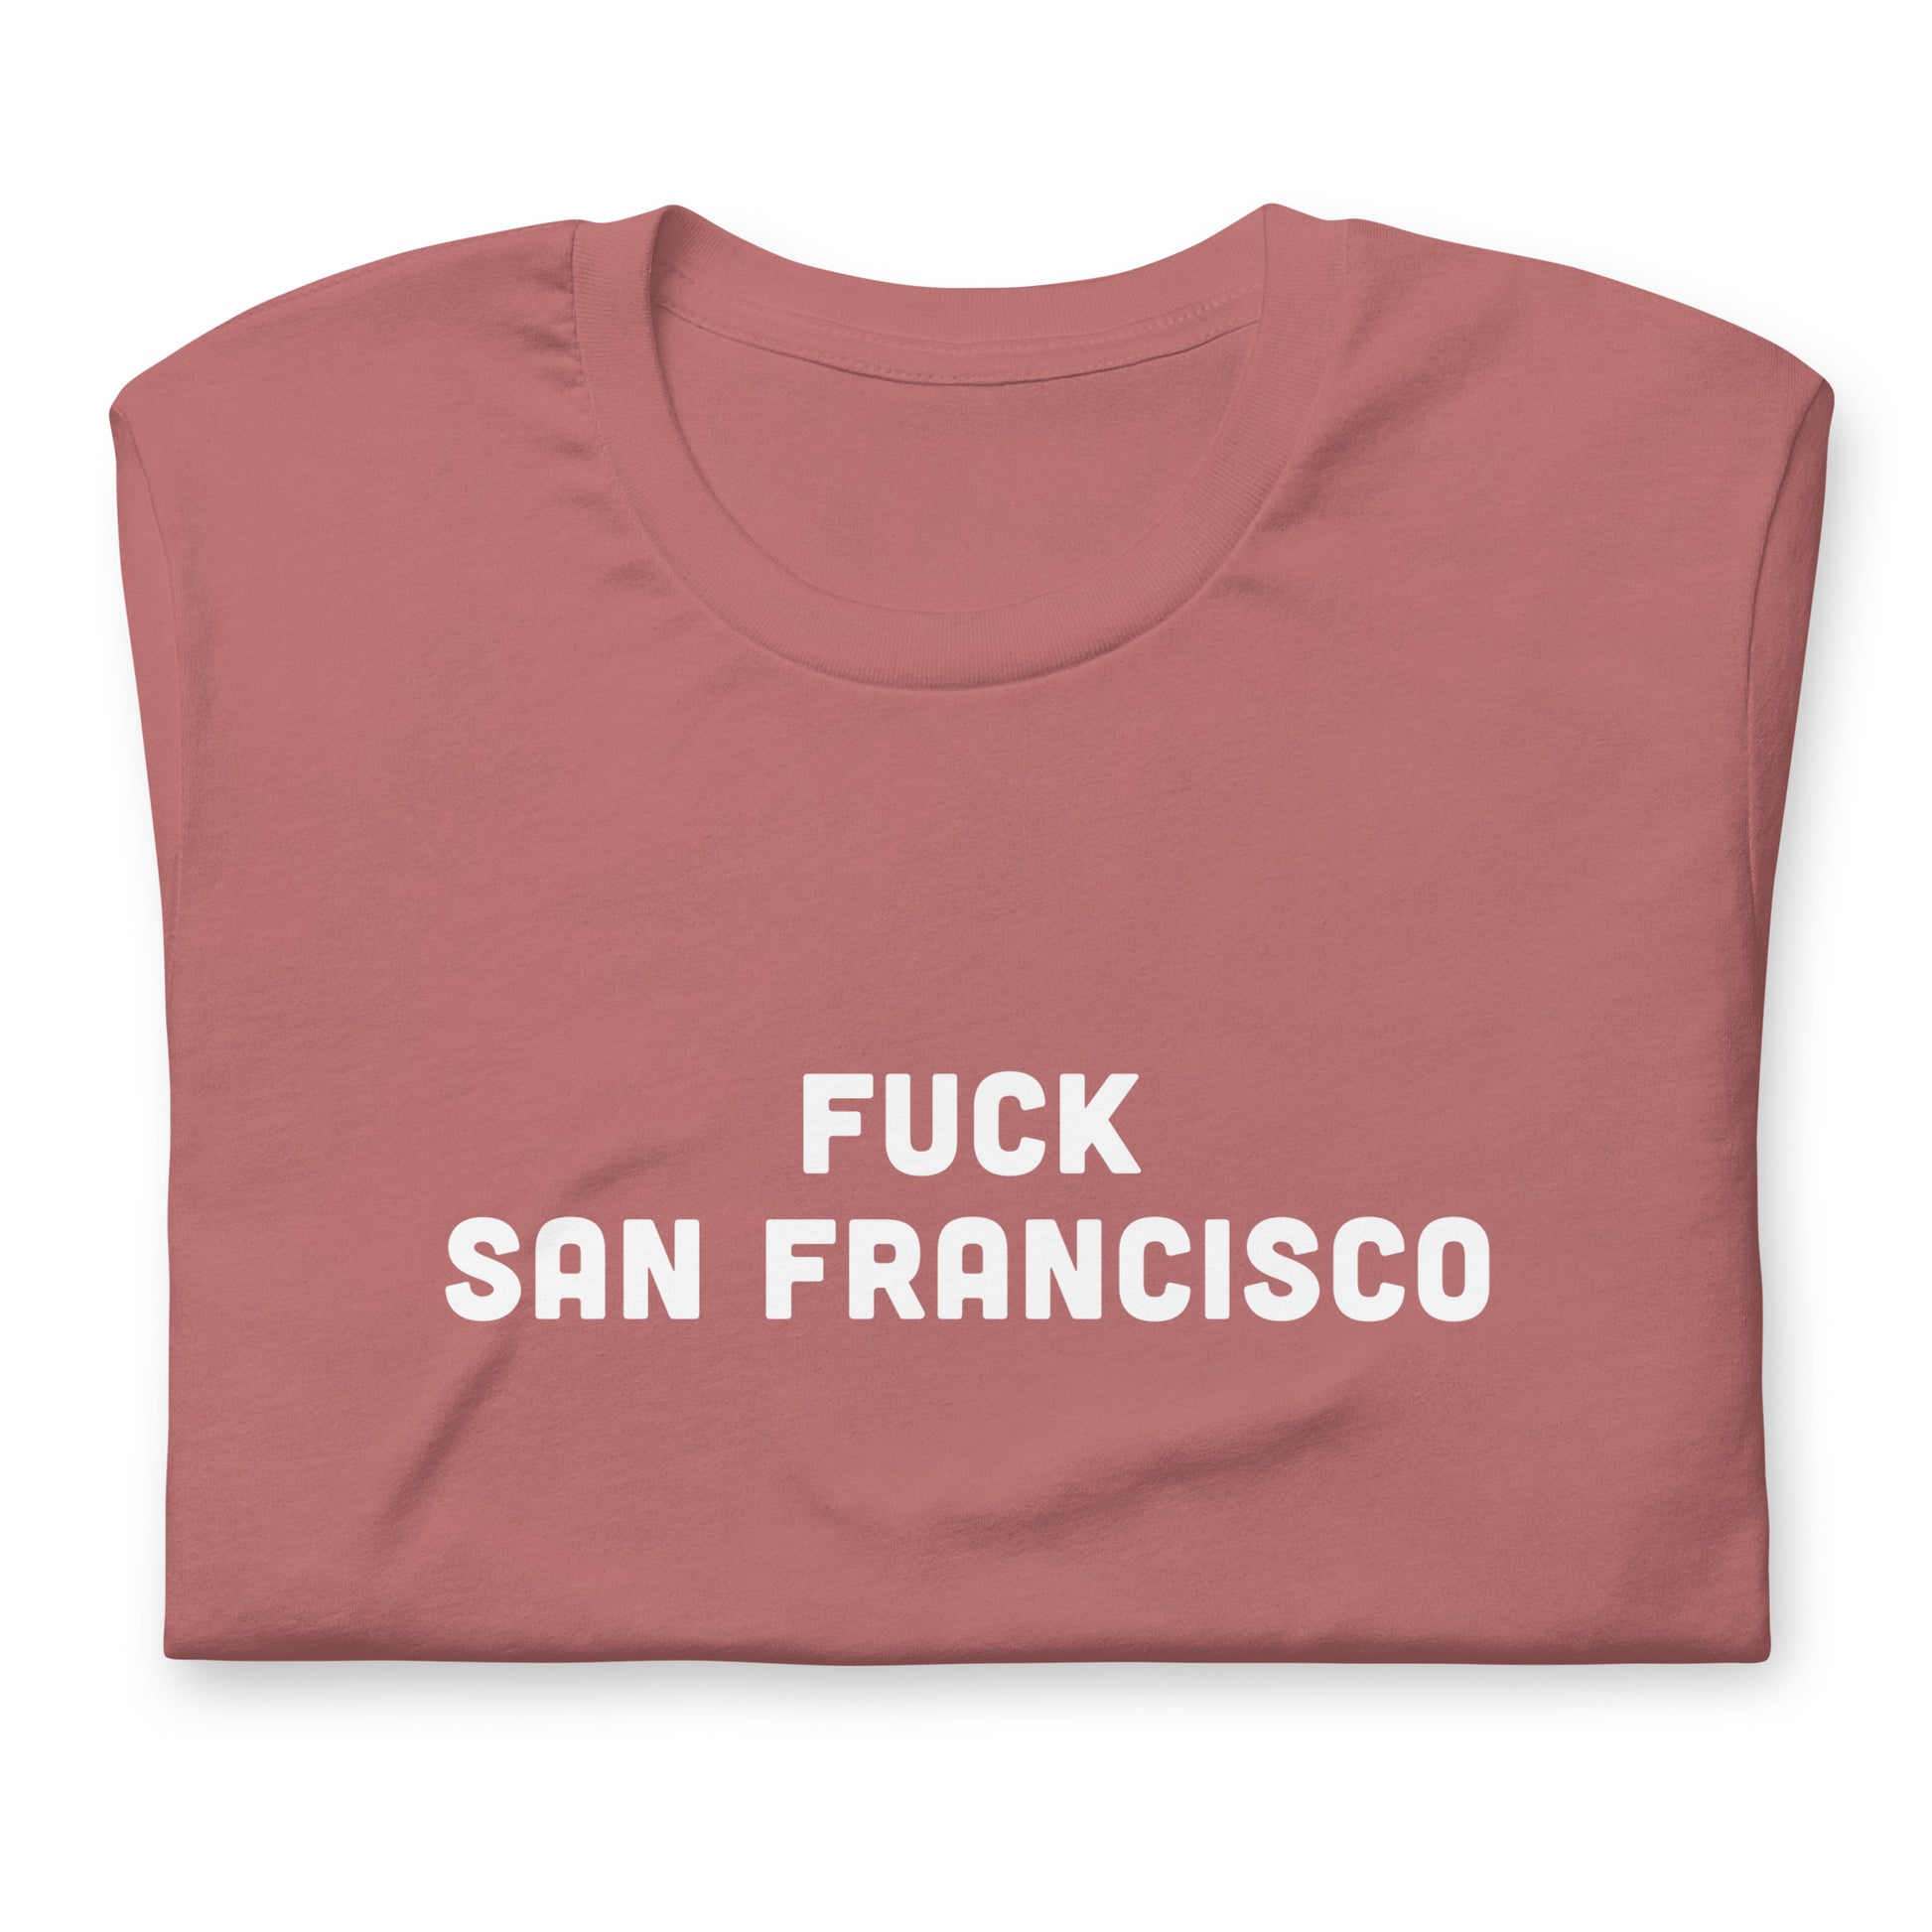 Fuck San Francisco T-Shirt Size 2XL Color Navy